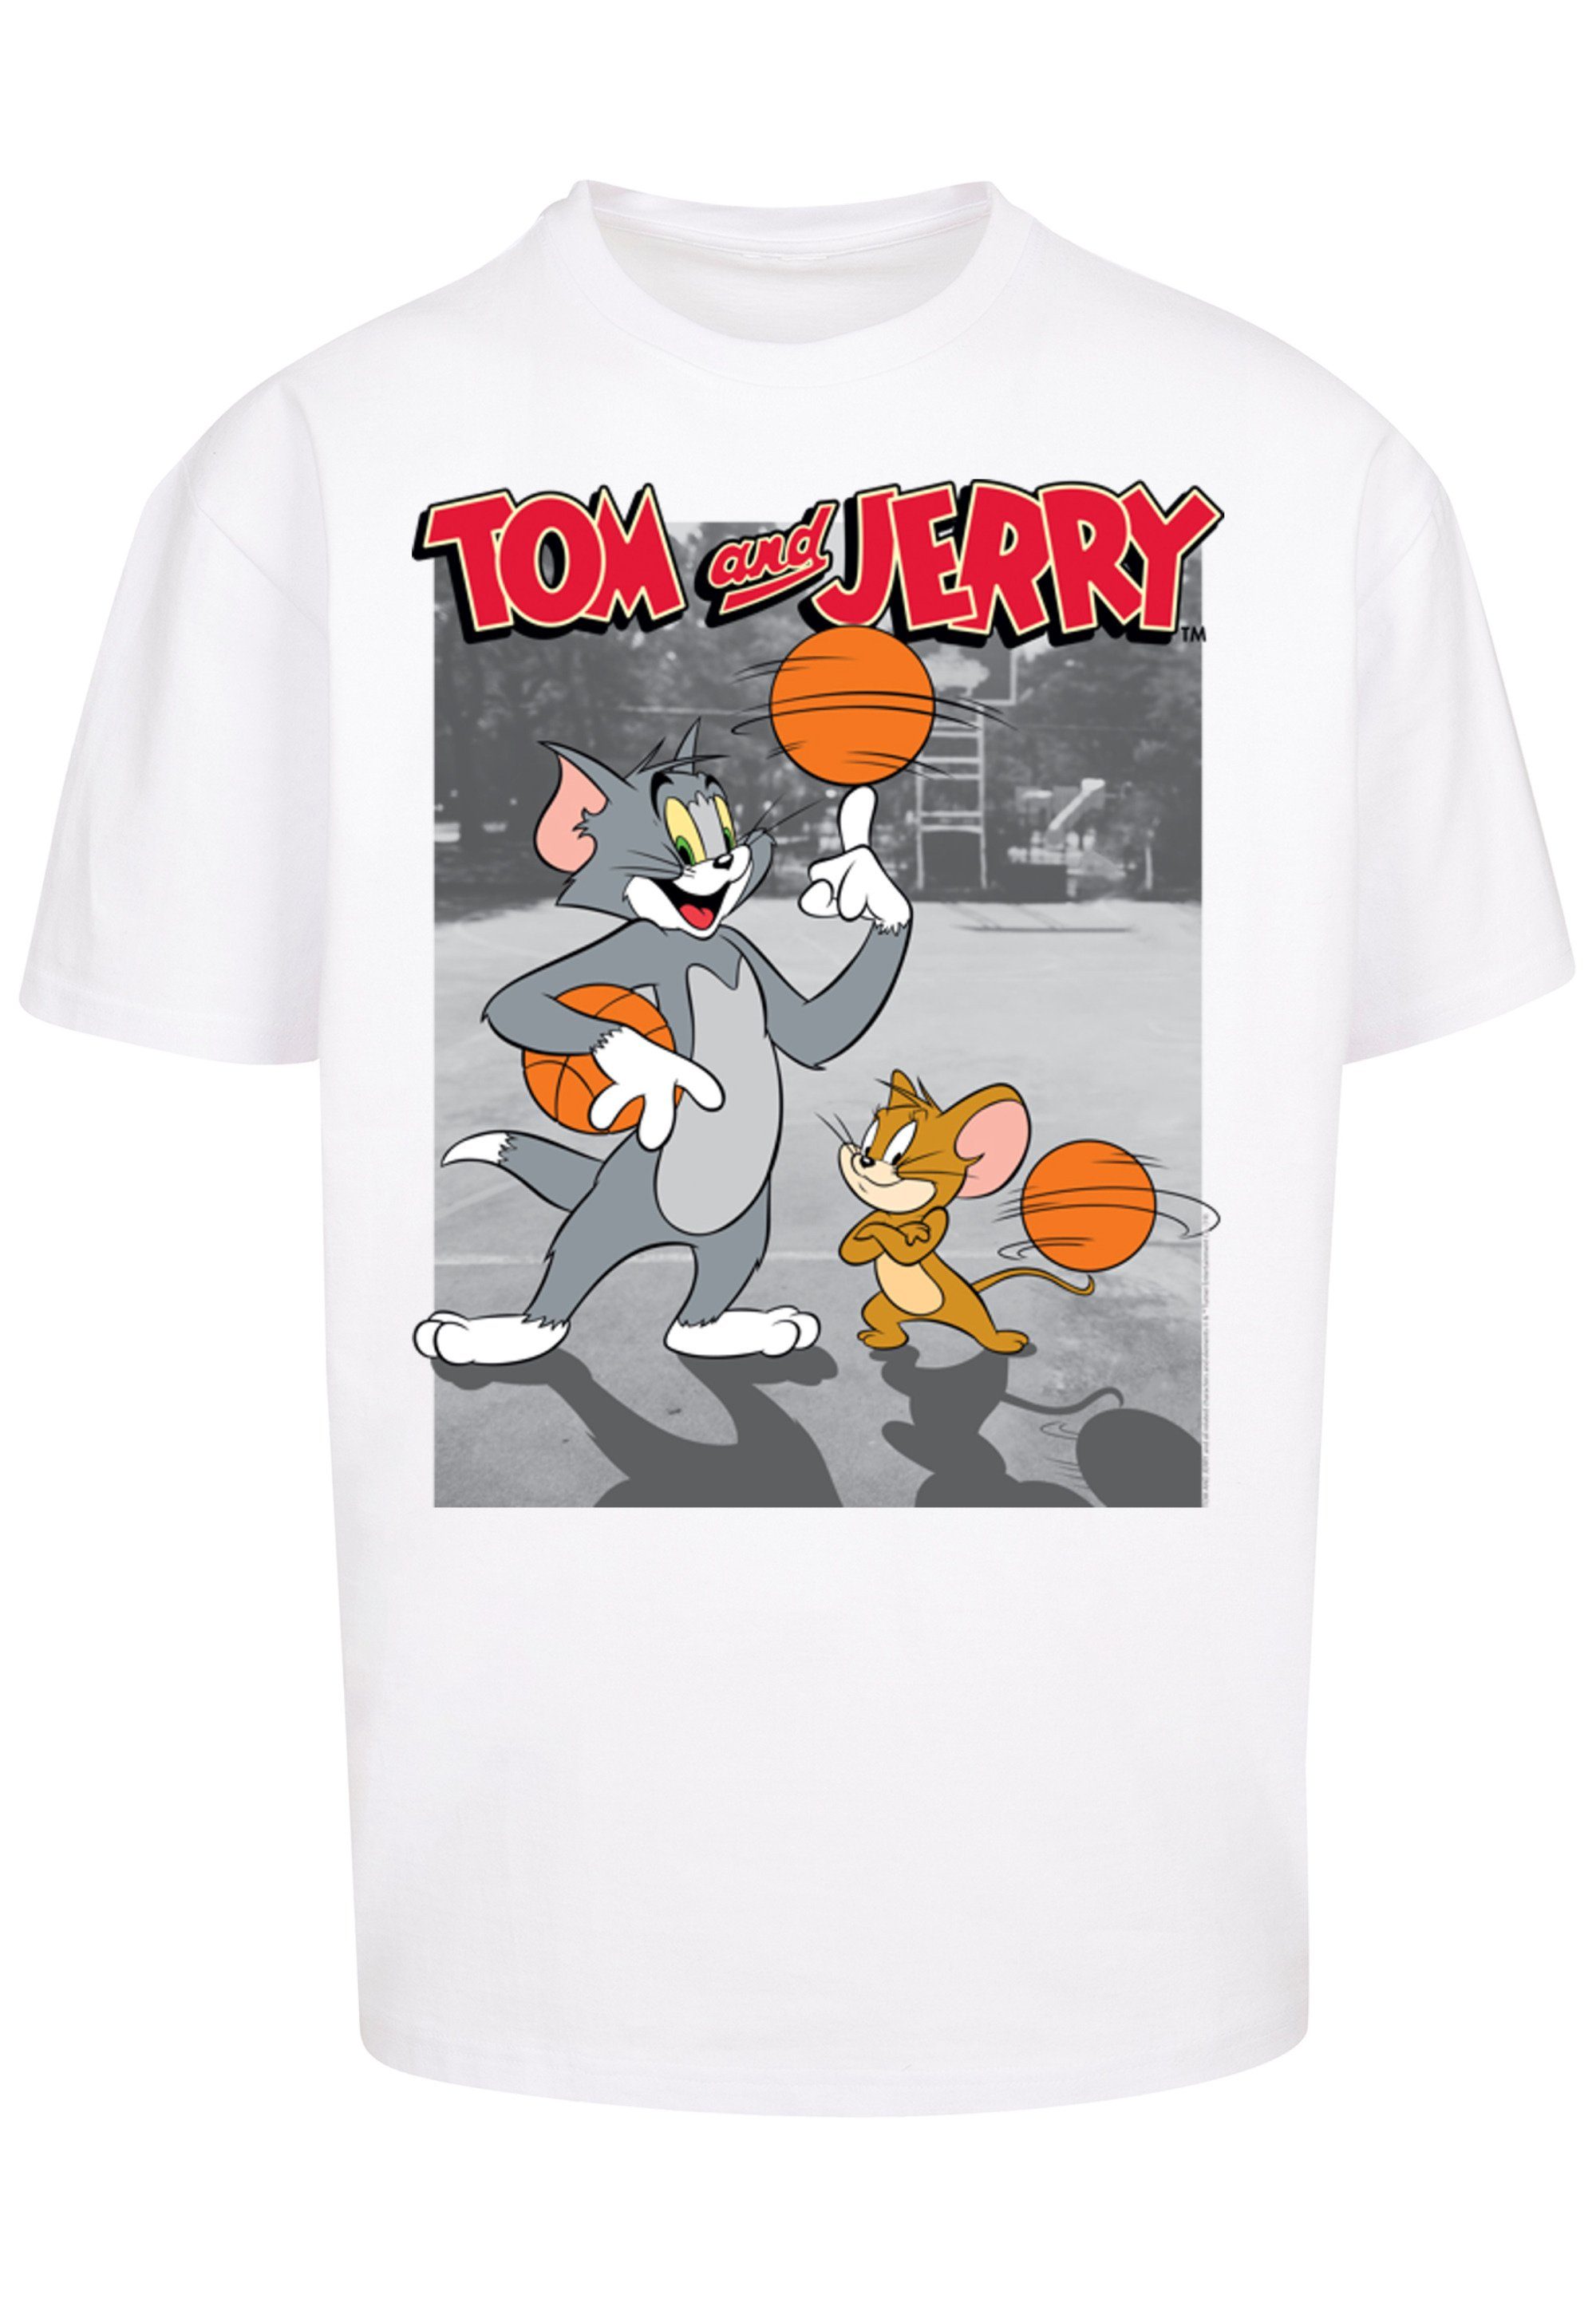 Buddies T-Shirt F4NT4STIC Jerry Basketball Tom und Print